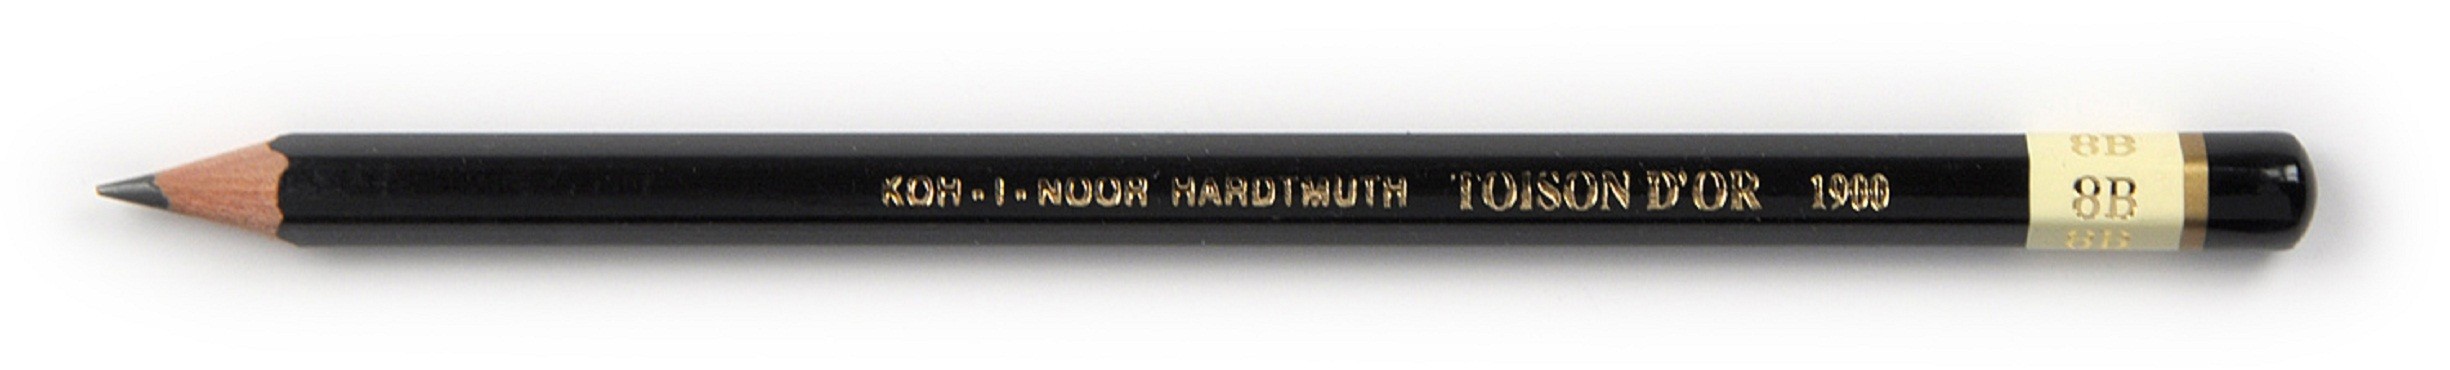 Creion tehnic Toison D'or Art KOH-I-NOOR, duritate 8B